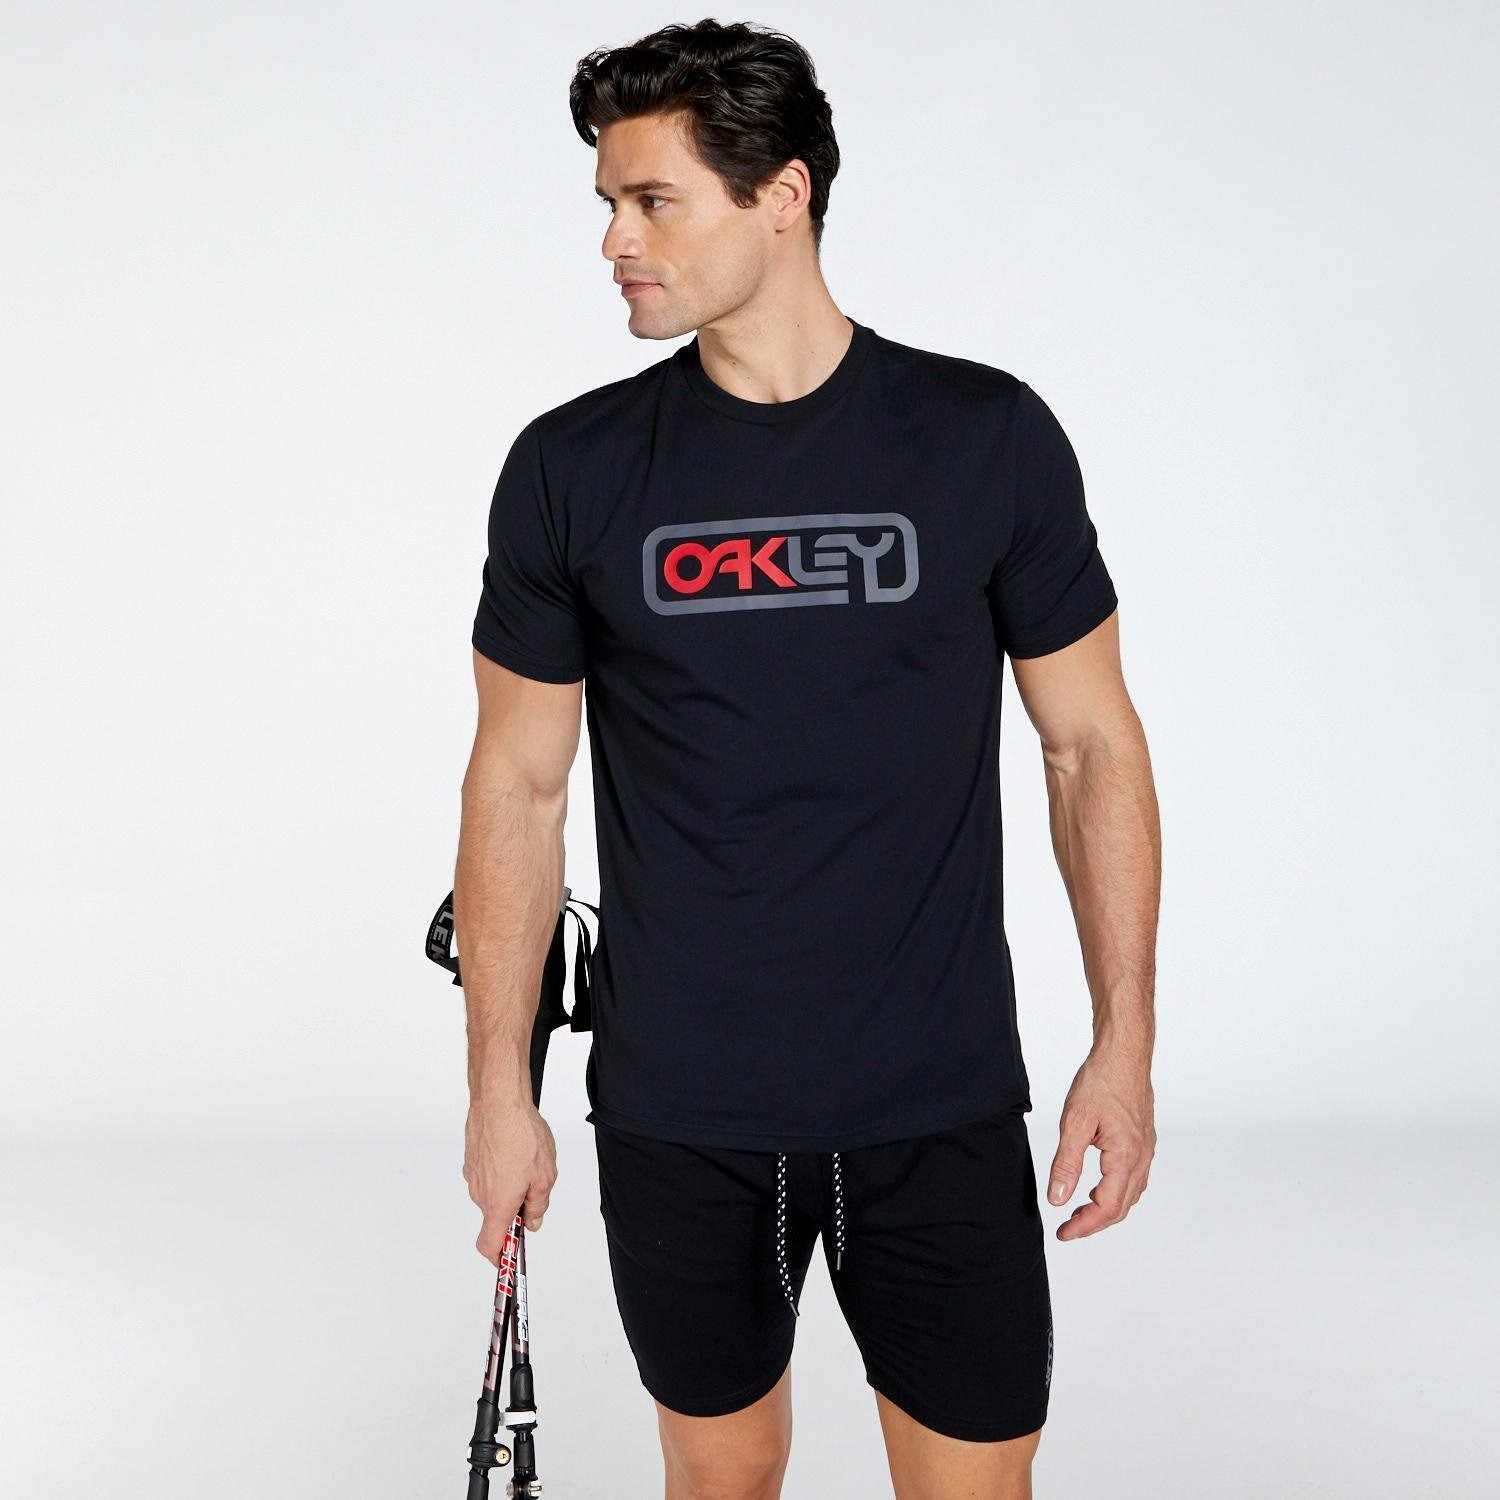 Oakley Oakley locked in b1b outdoorshirt zwart/grijs heren heren